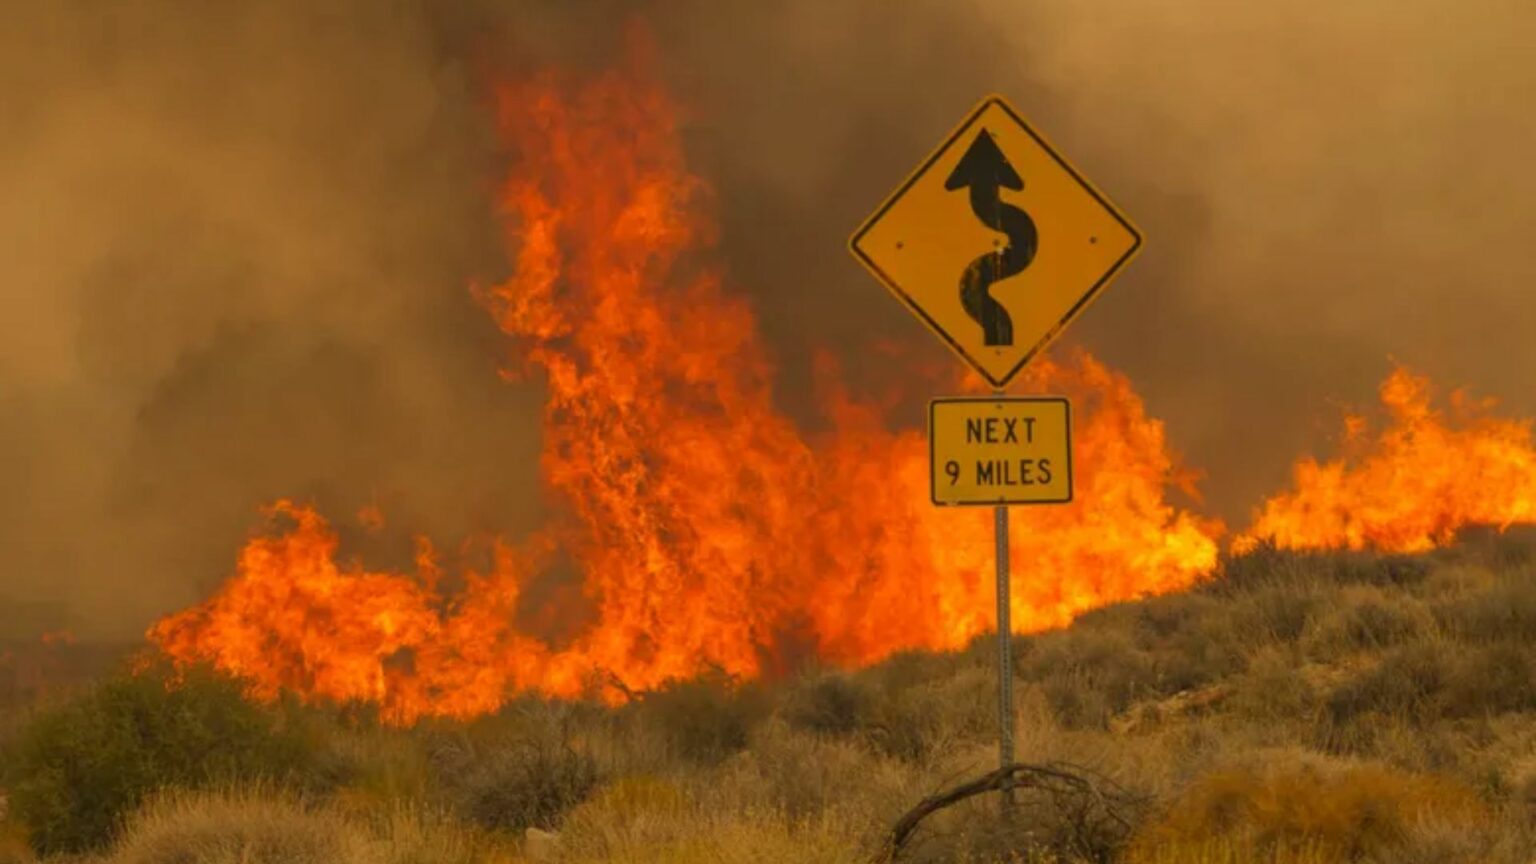 York Fire, Reaches Nevada, Burns Through Joshua Forests - Asiana Times